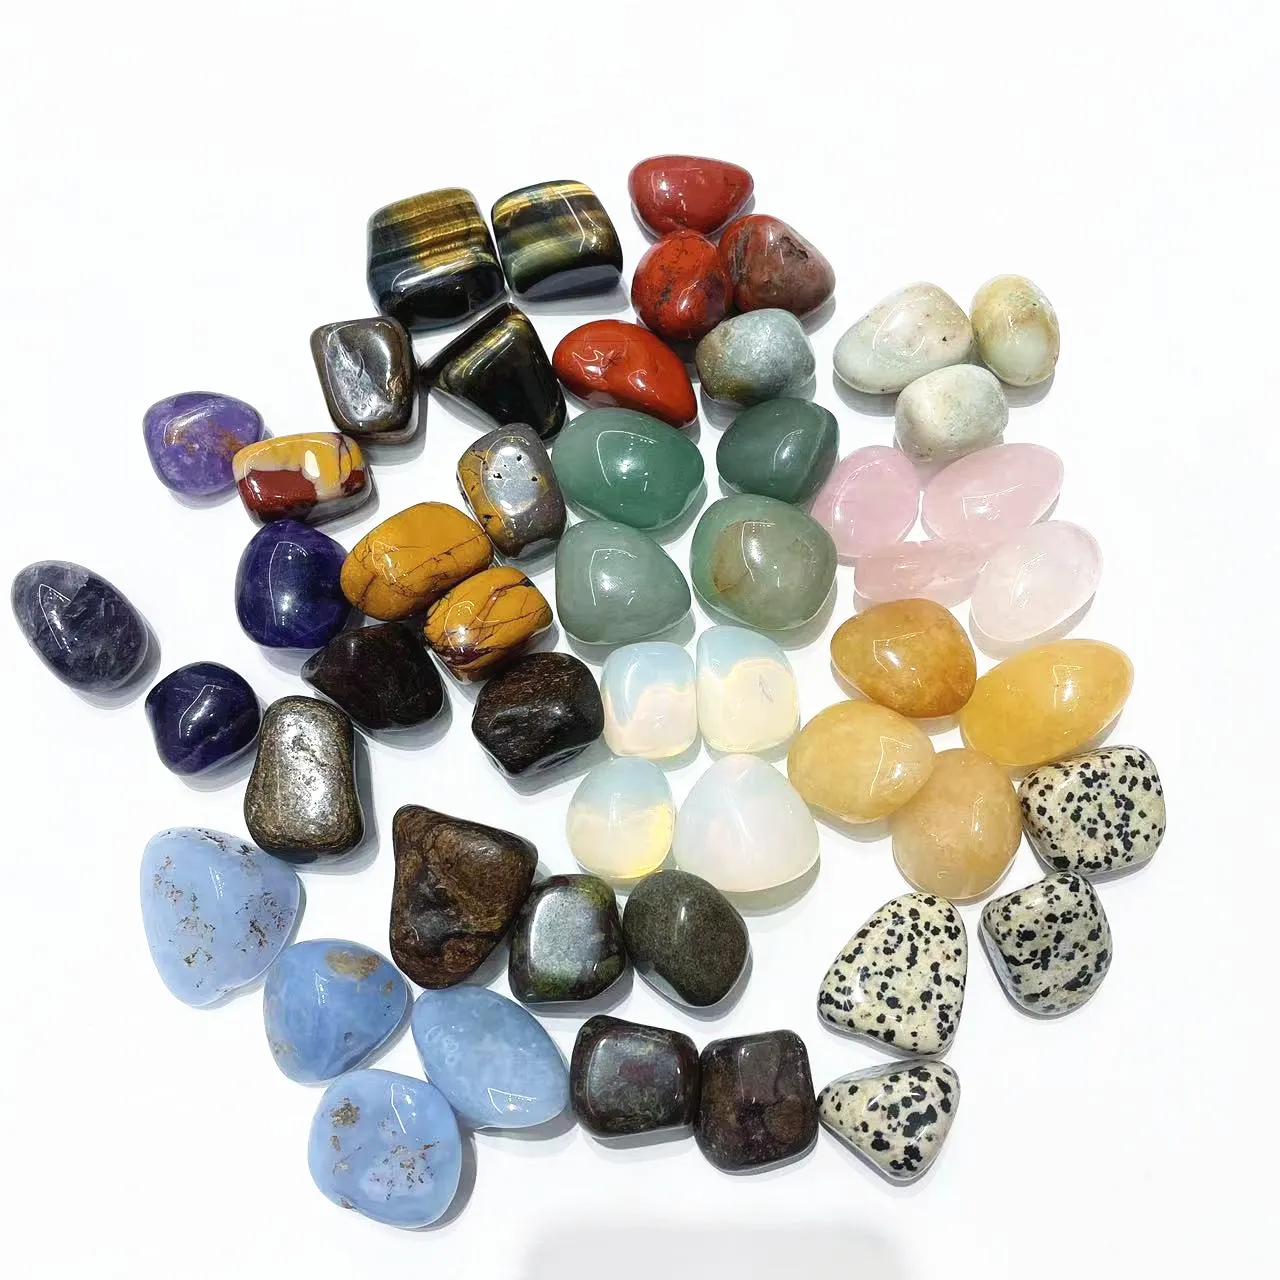 Mixed Healing stone polishing bulk crystals chakra stones rose quartz crystal Tumbled stone